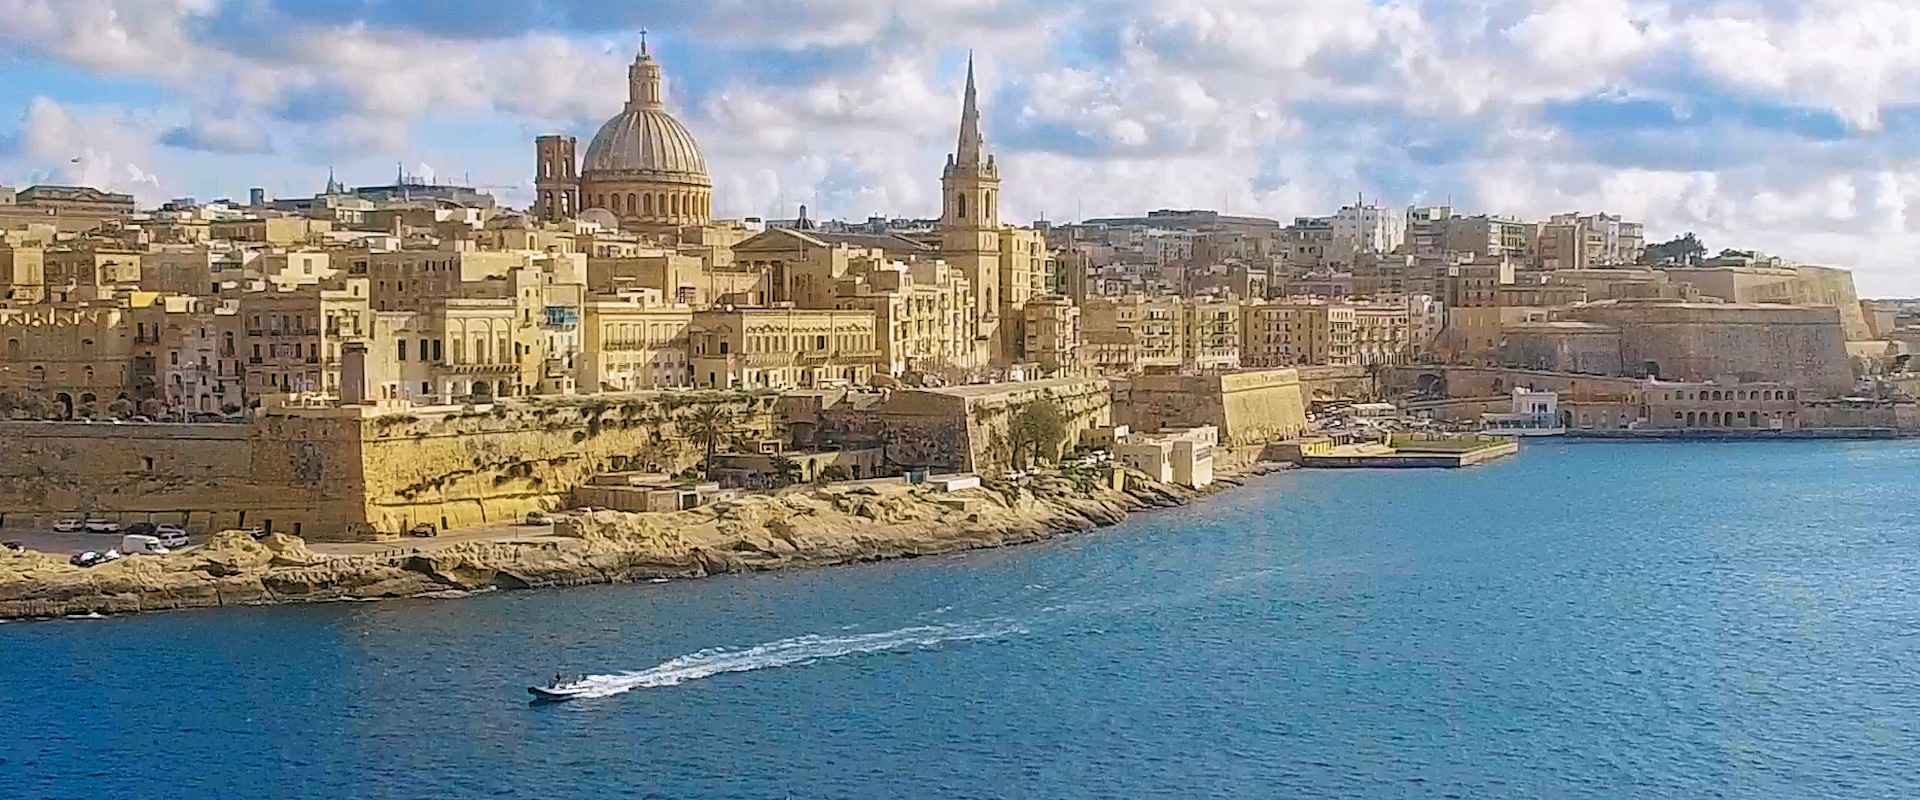 Valetta, Malta's capital - Aerial view